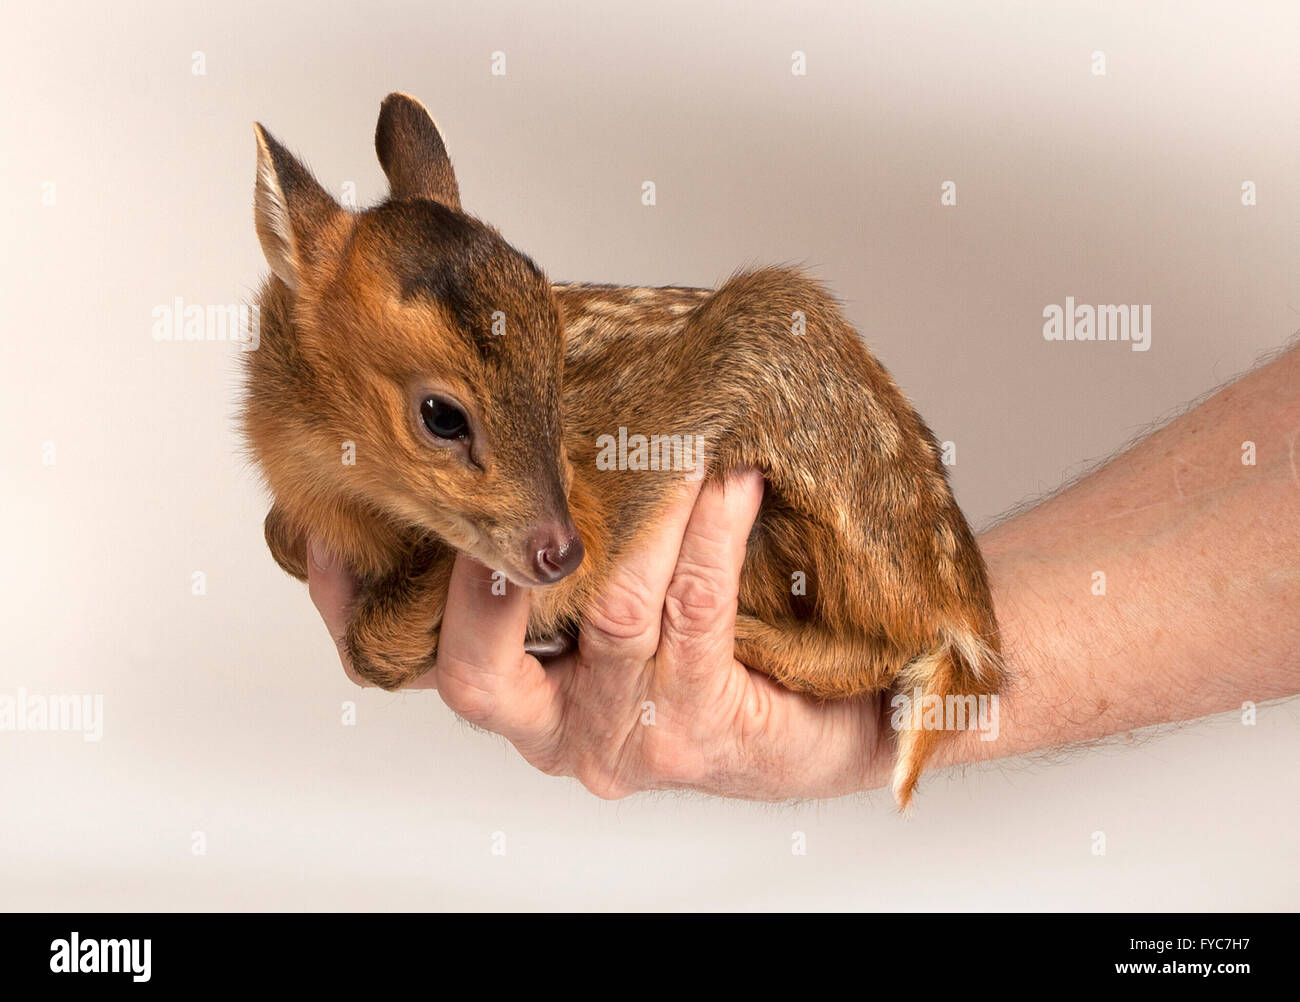 Muntjac deer, Muntiacus reevesi, Juvenile in hand Stock Photo